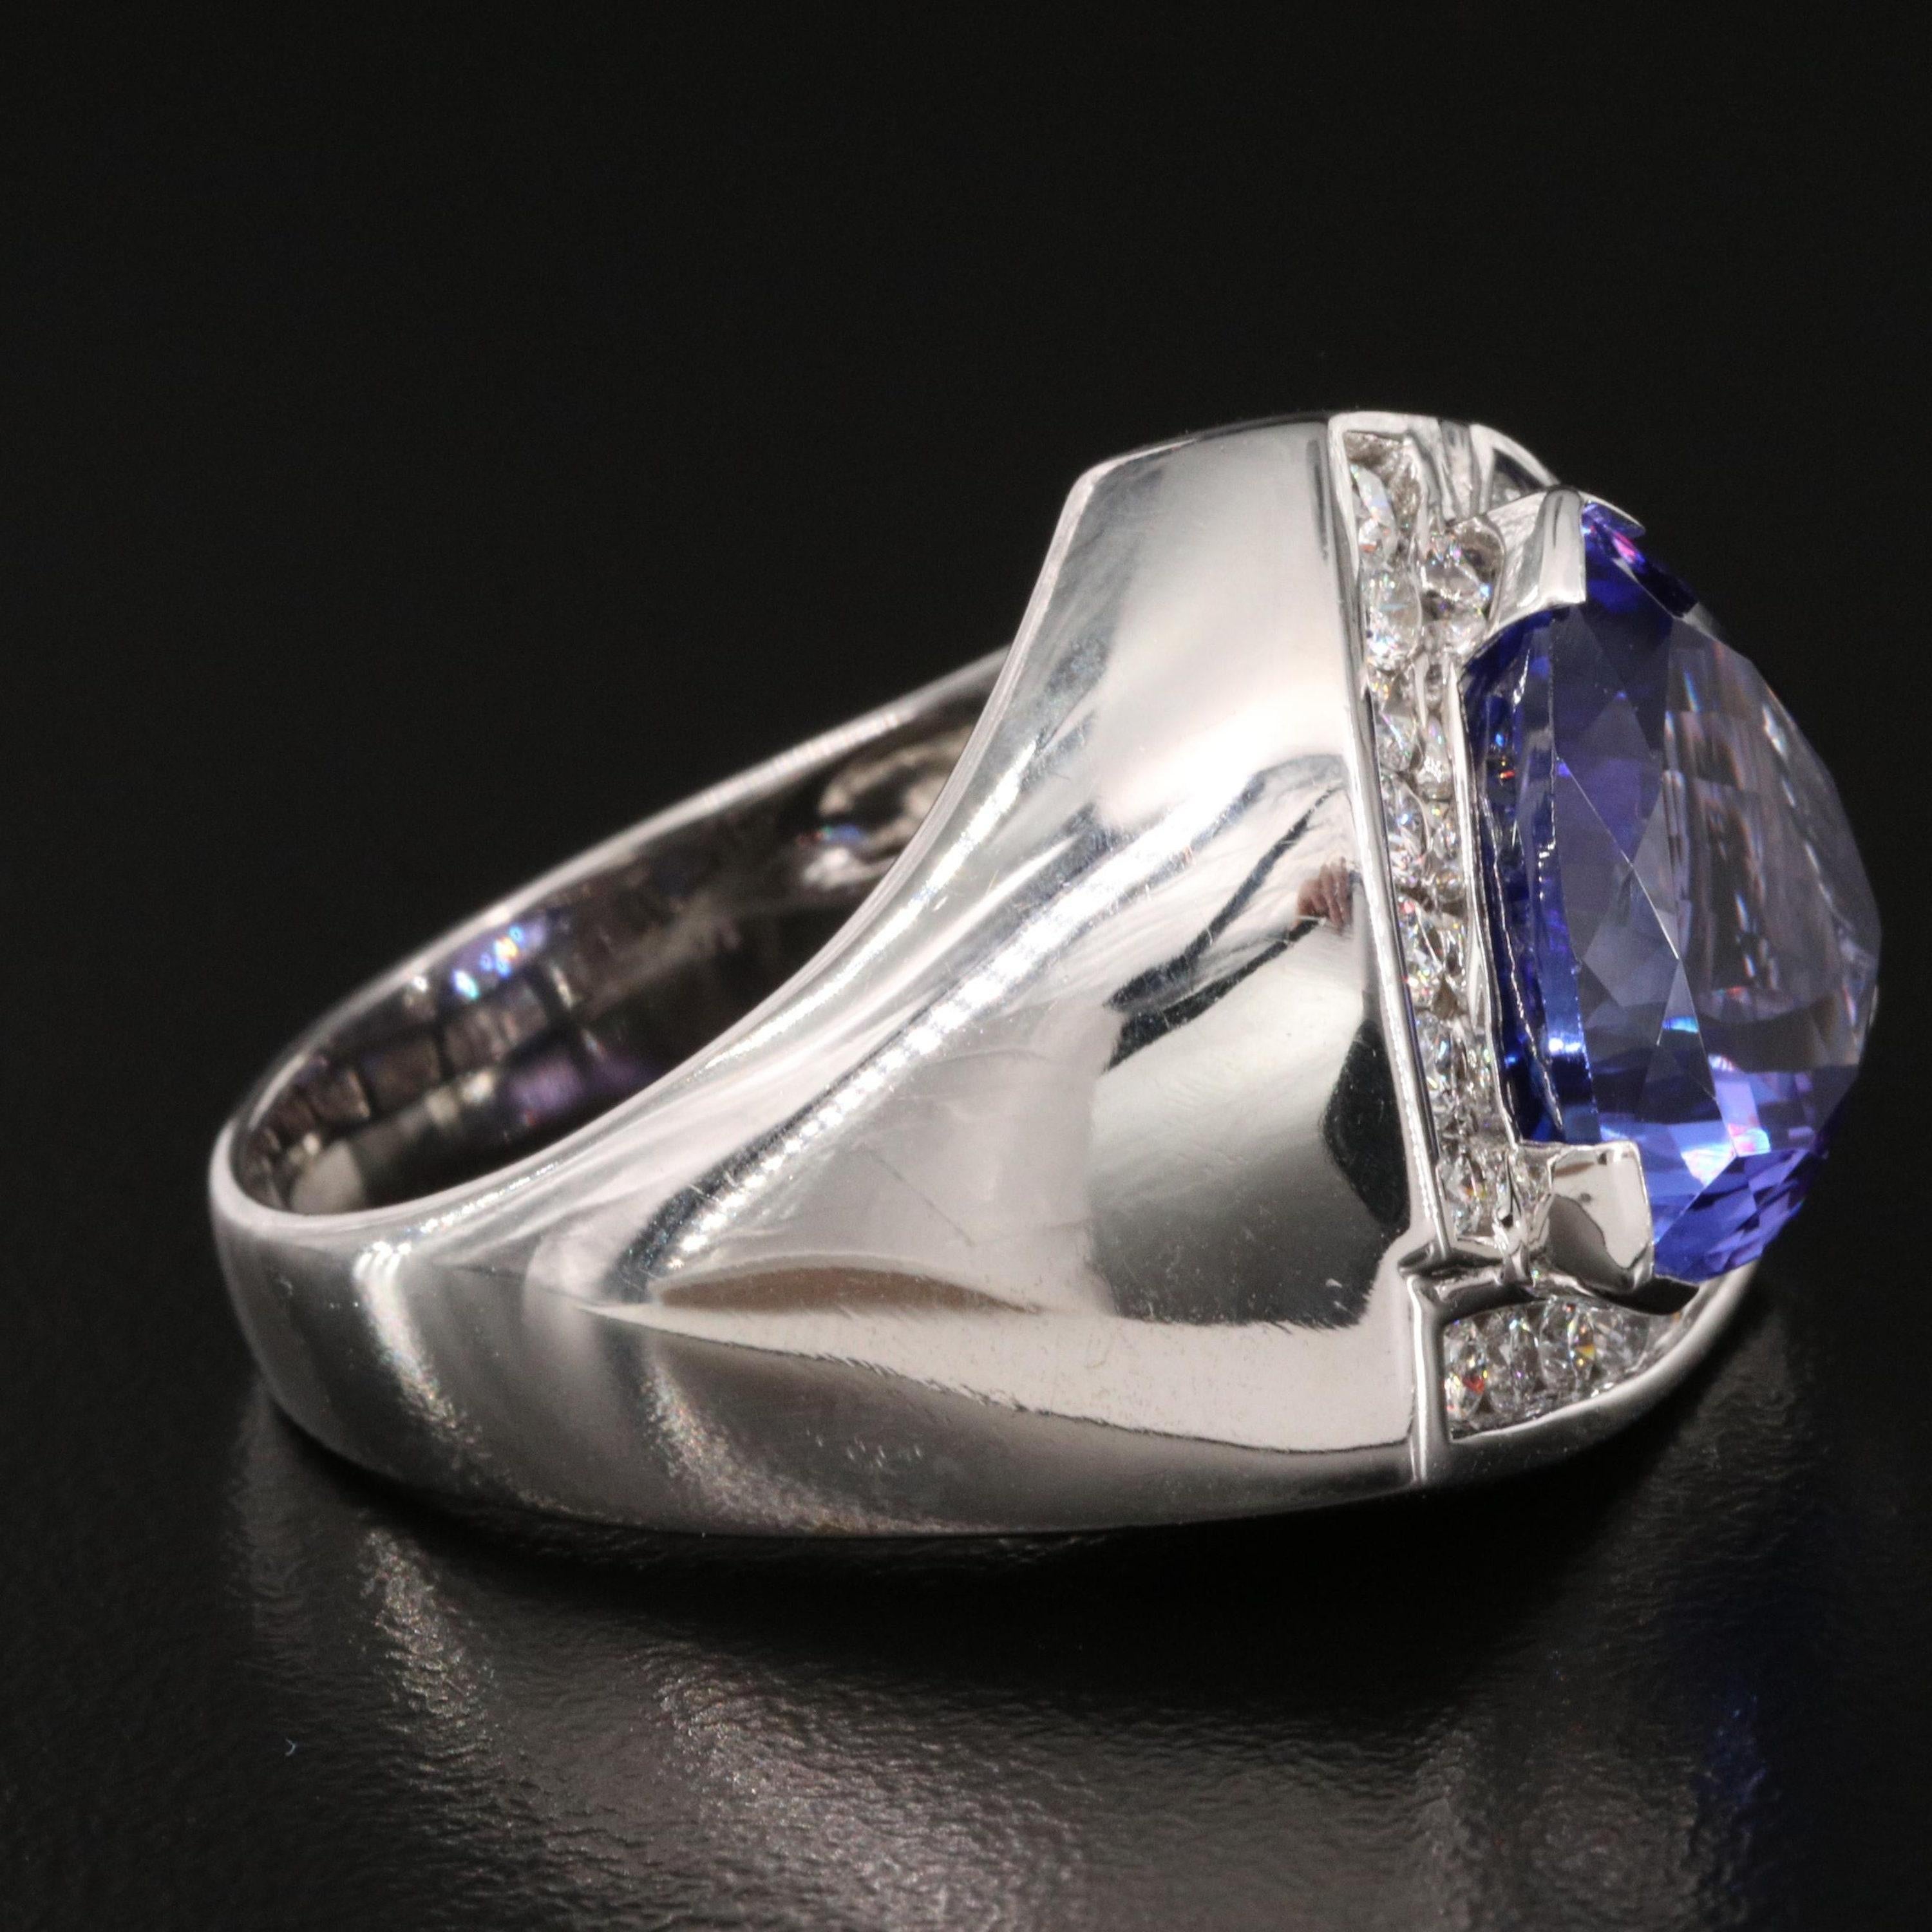 For Sale:  5 Carat Halo Trillion Cut Tanzanite Fashion Ring White Gold Cocktail Ring Band 6